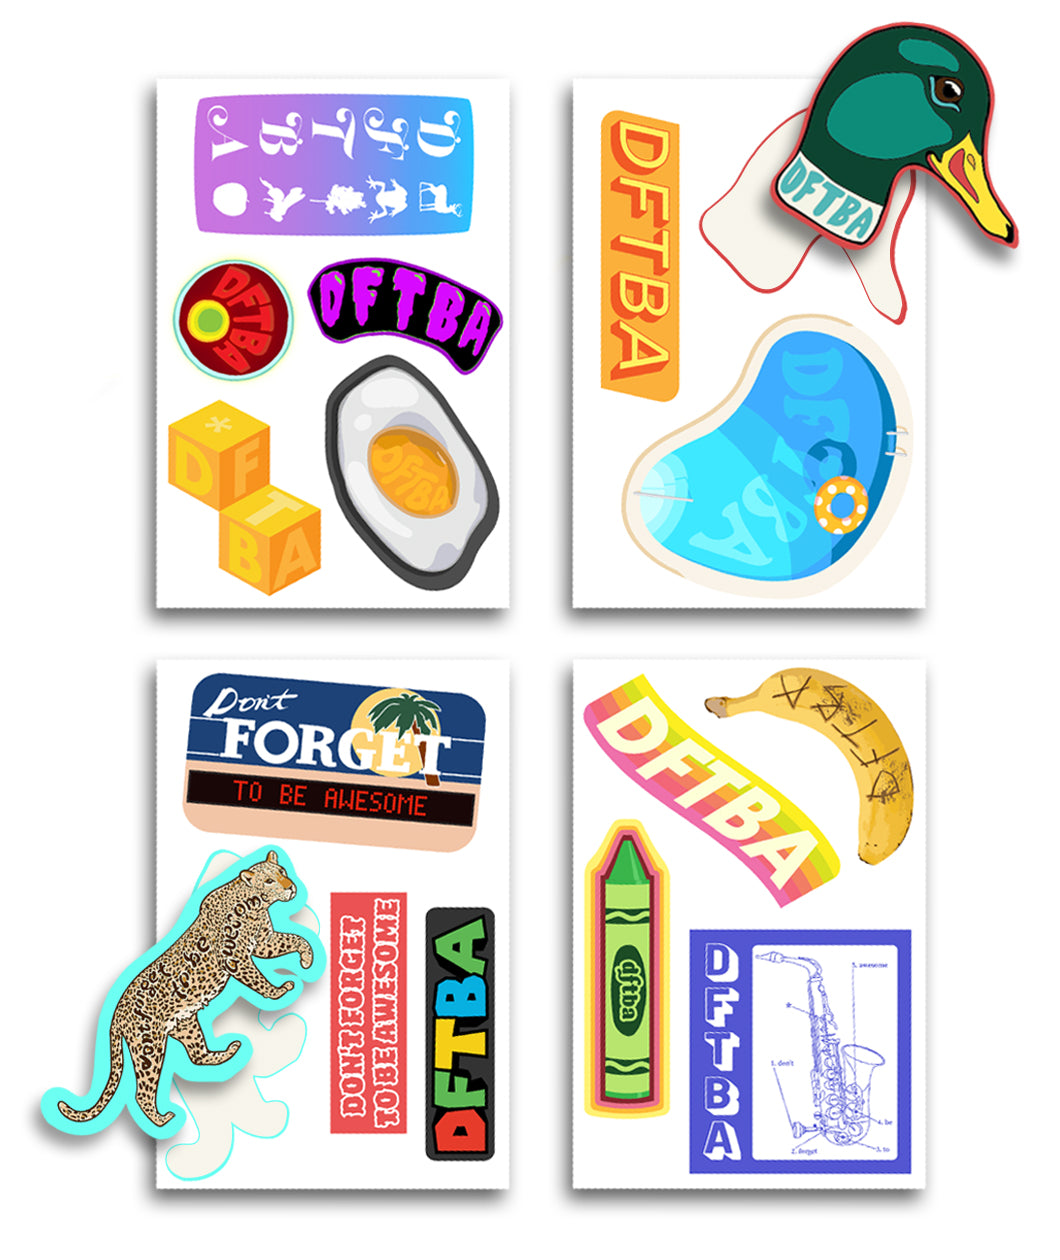 Sixteen different designs of “ DFTBA